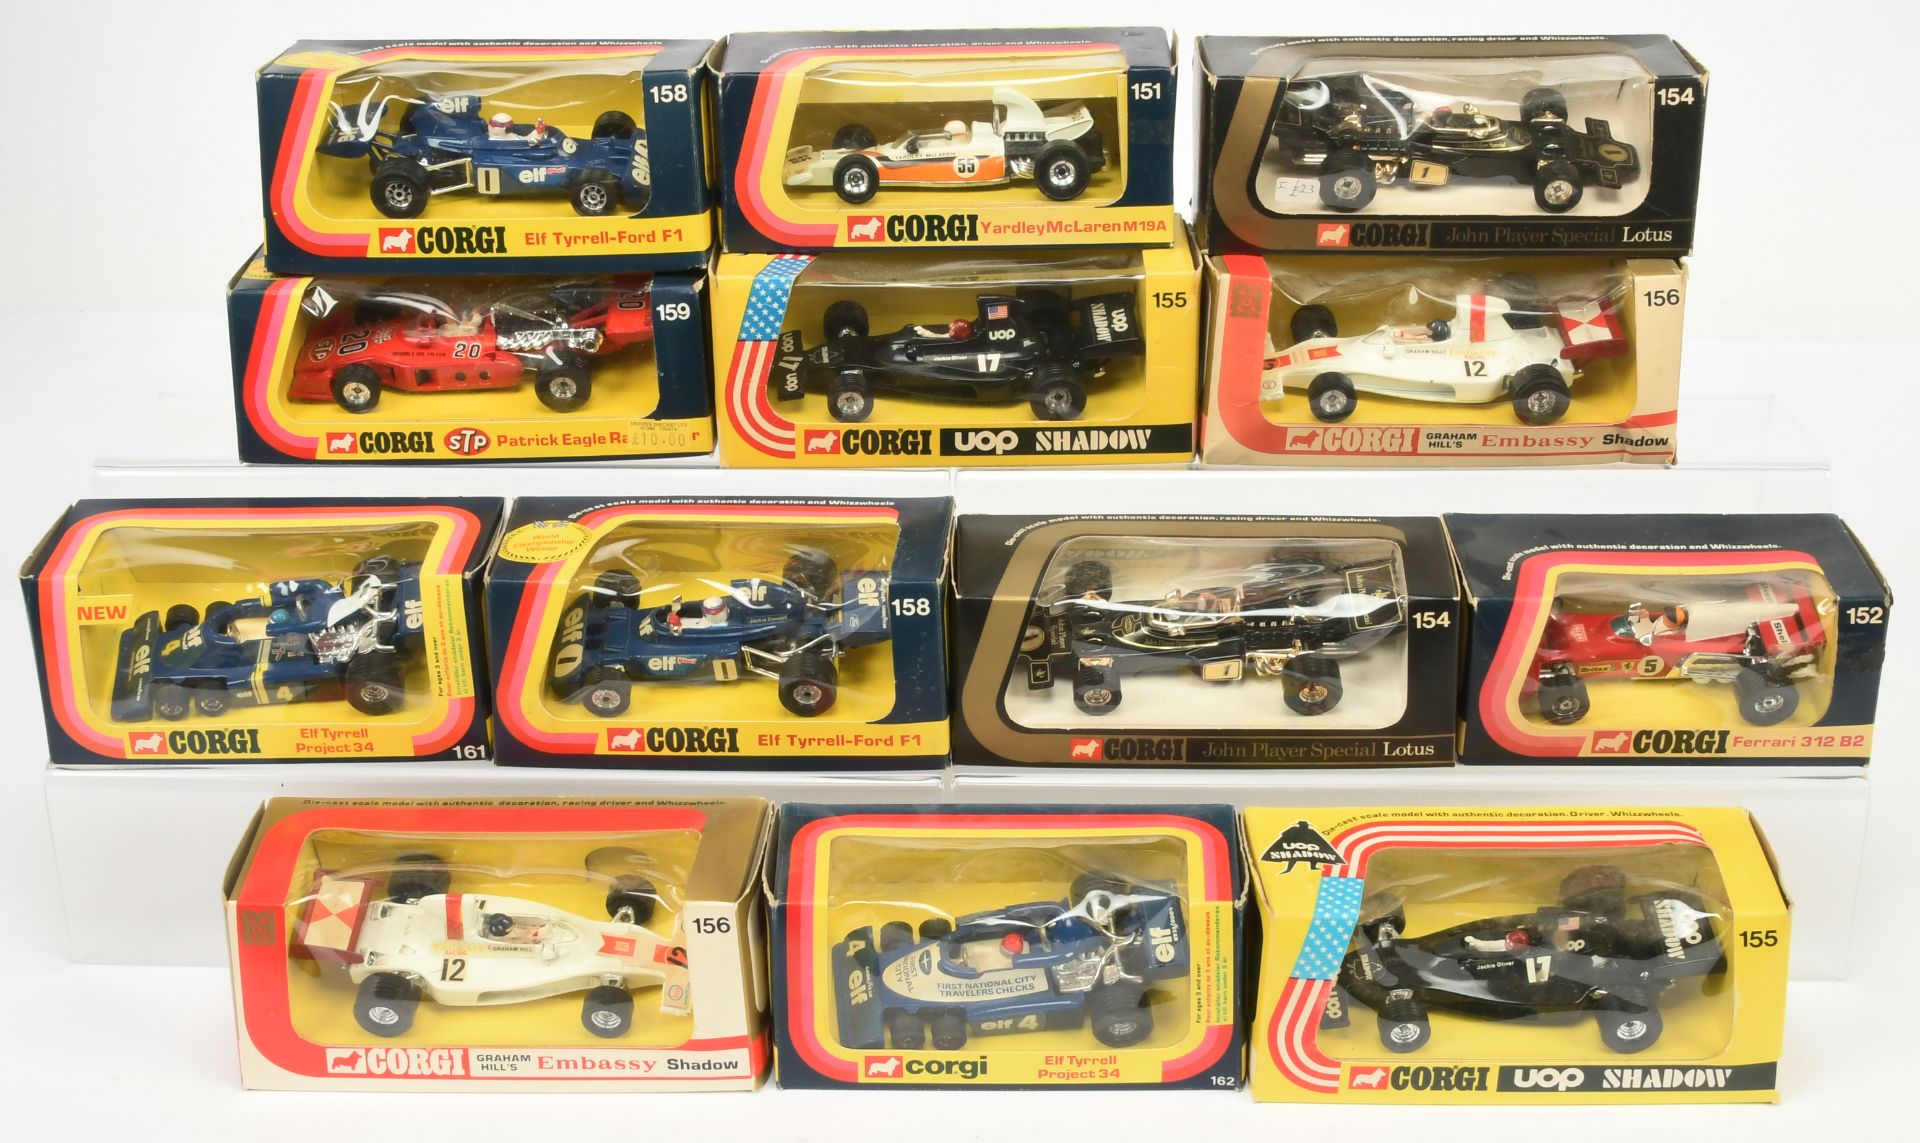 Corgi Toys Racing Cars Group Of 13 To Include - 151 "Yardley" McLaren, 154 Lotus "JPS", 156 Shado...